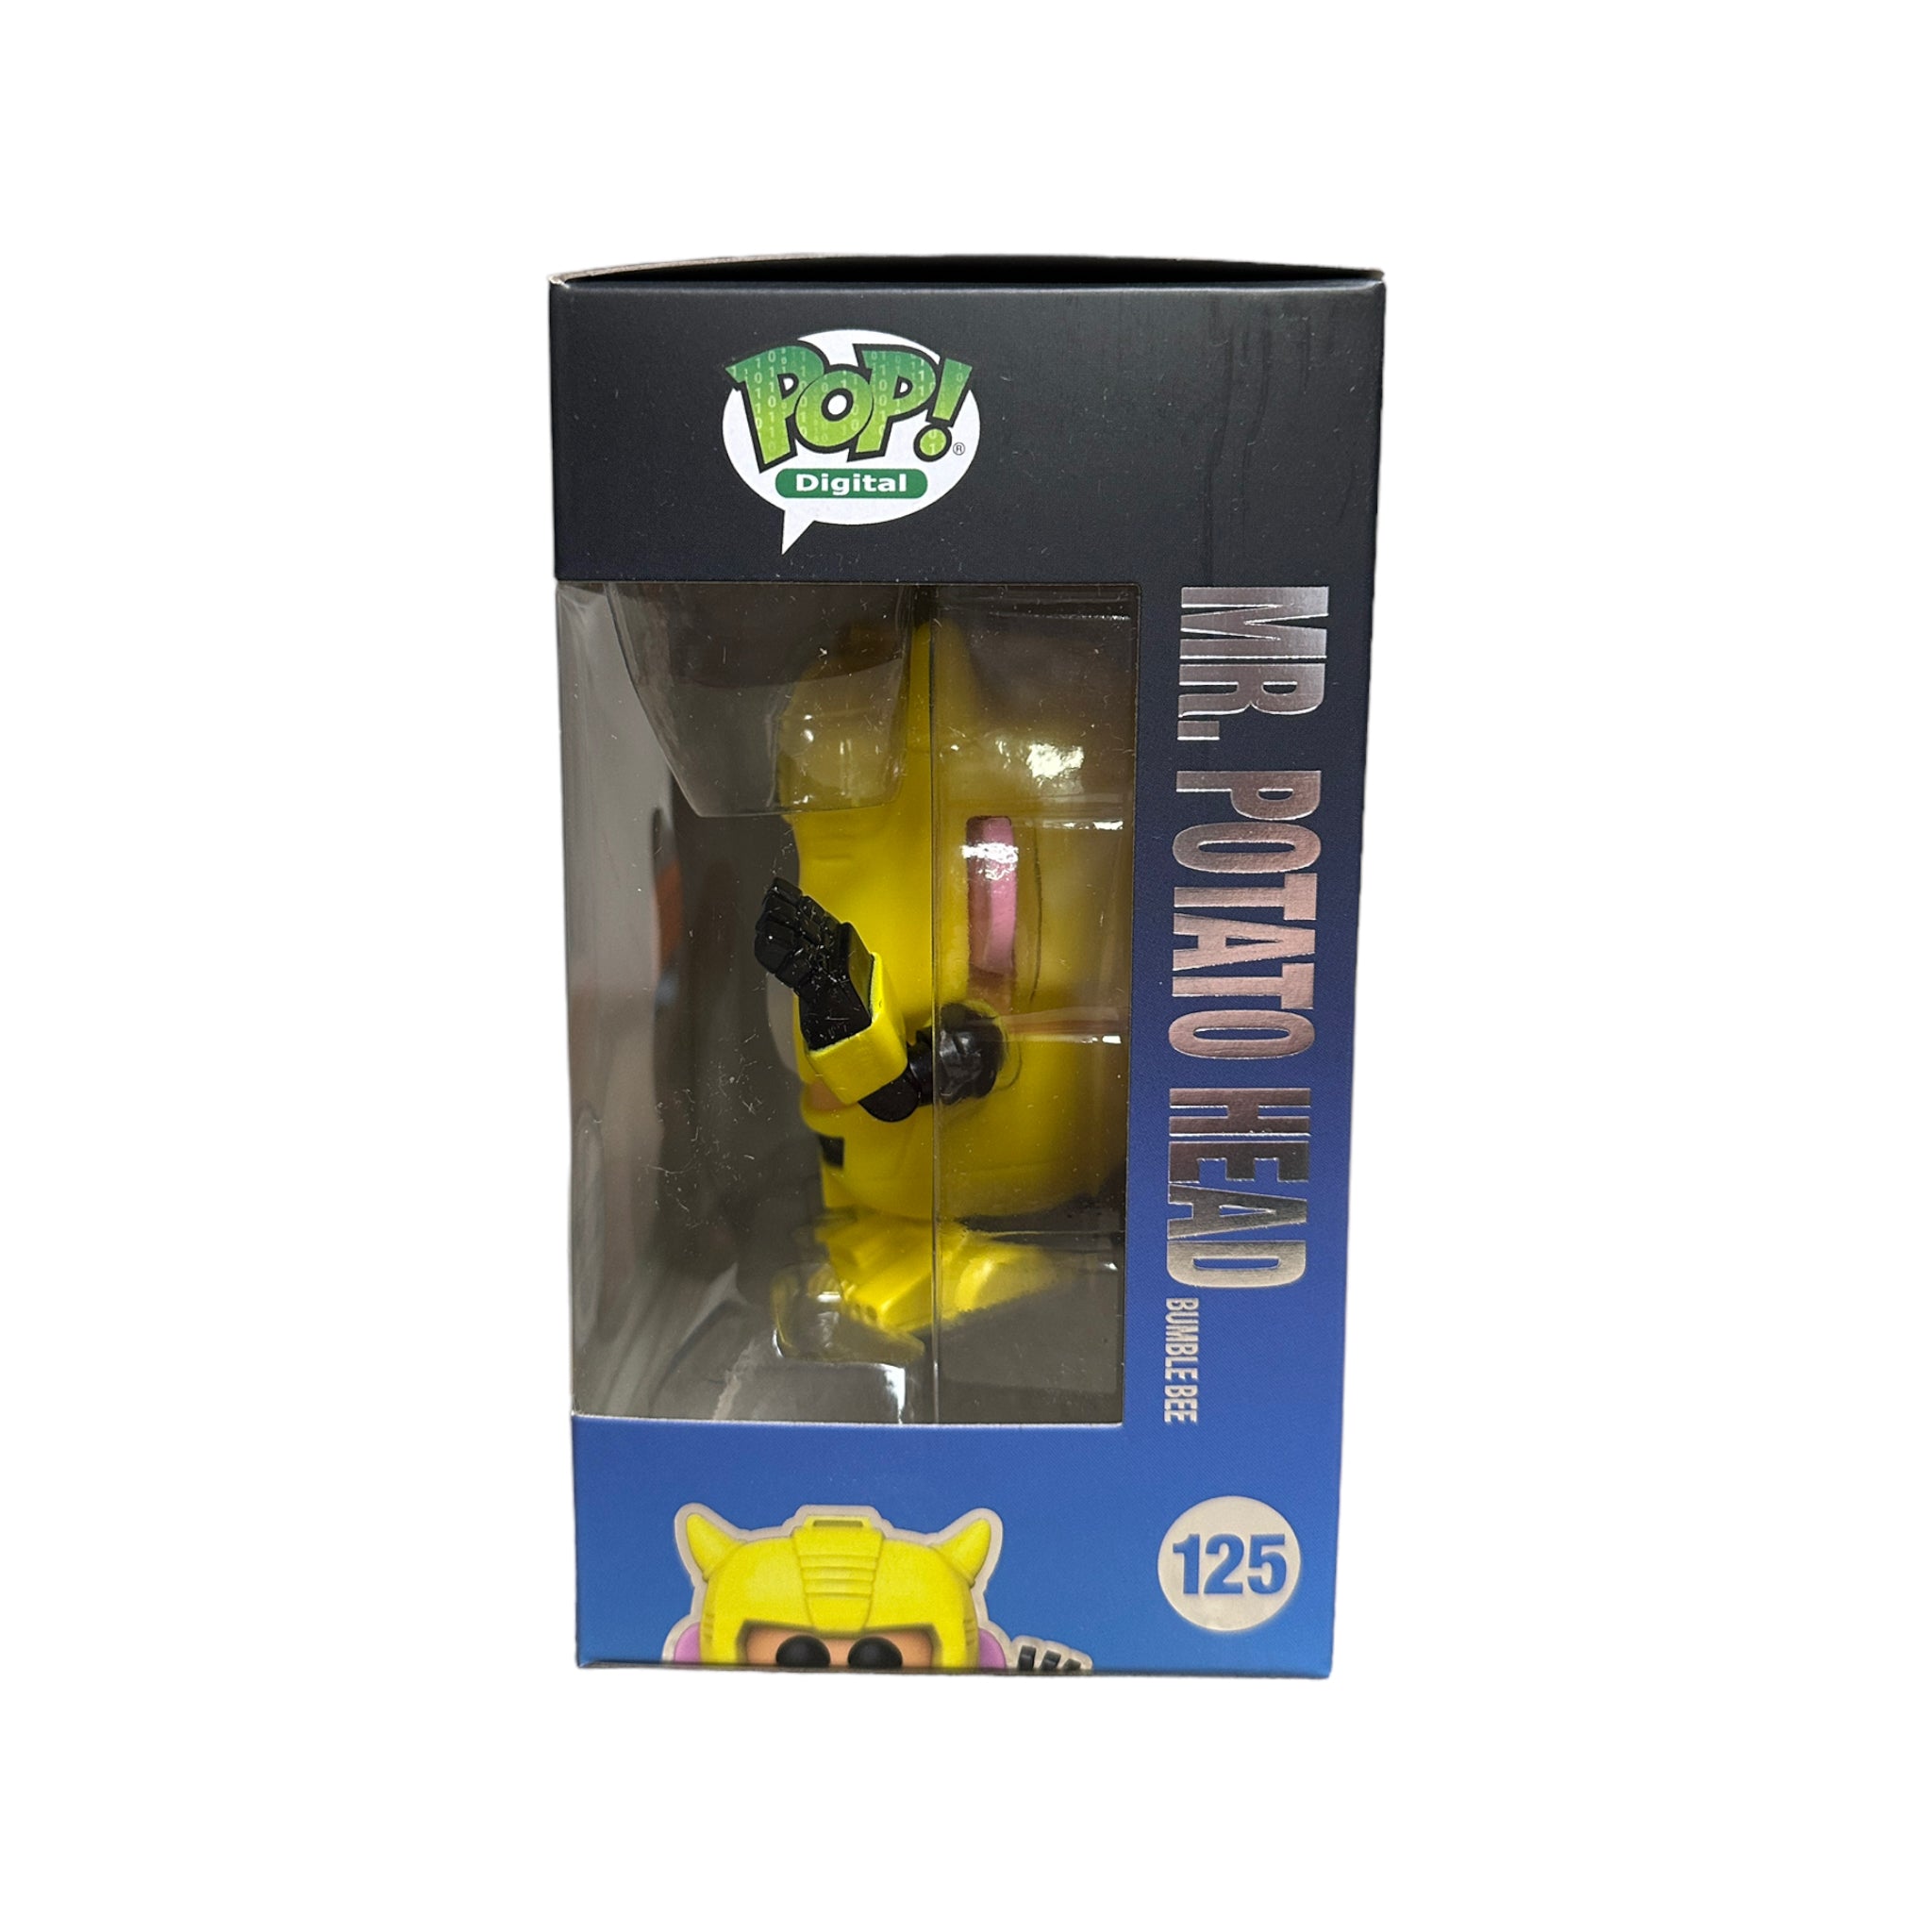 Mr. Potato Head Bumblebee #125 Funko Pop! - Retro Toys - NFT Release Exclusive LE1550 Pcs - Condition 8.75/10